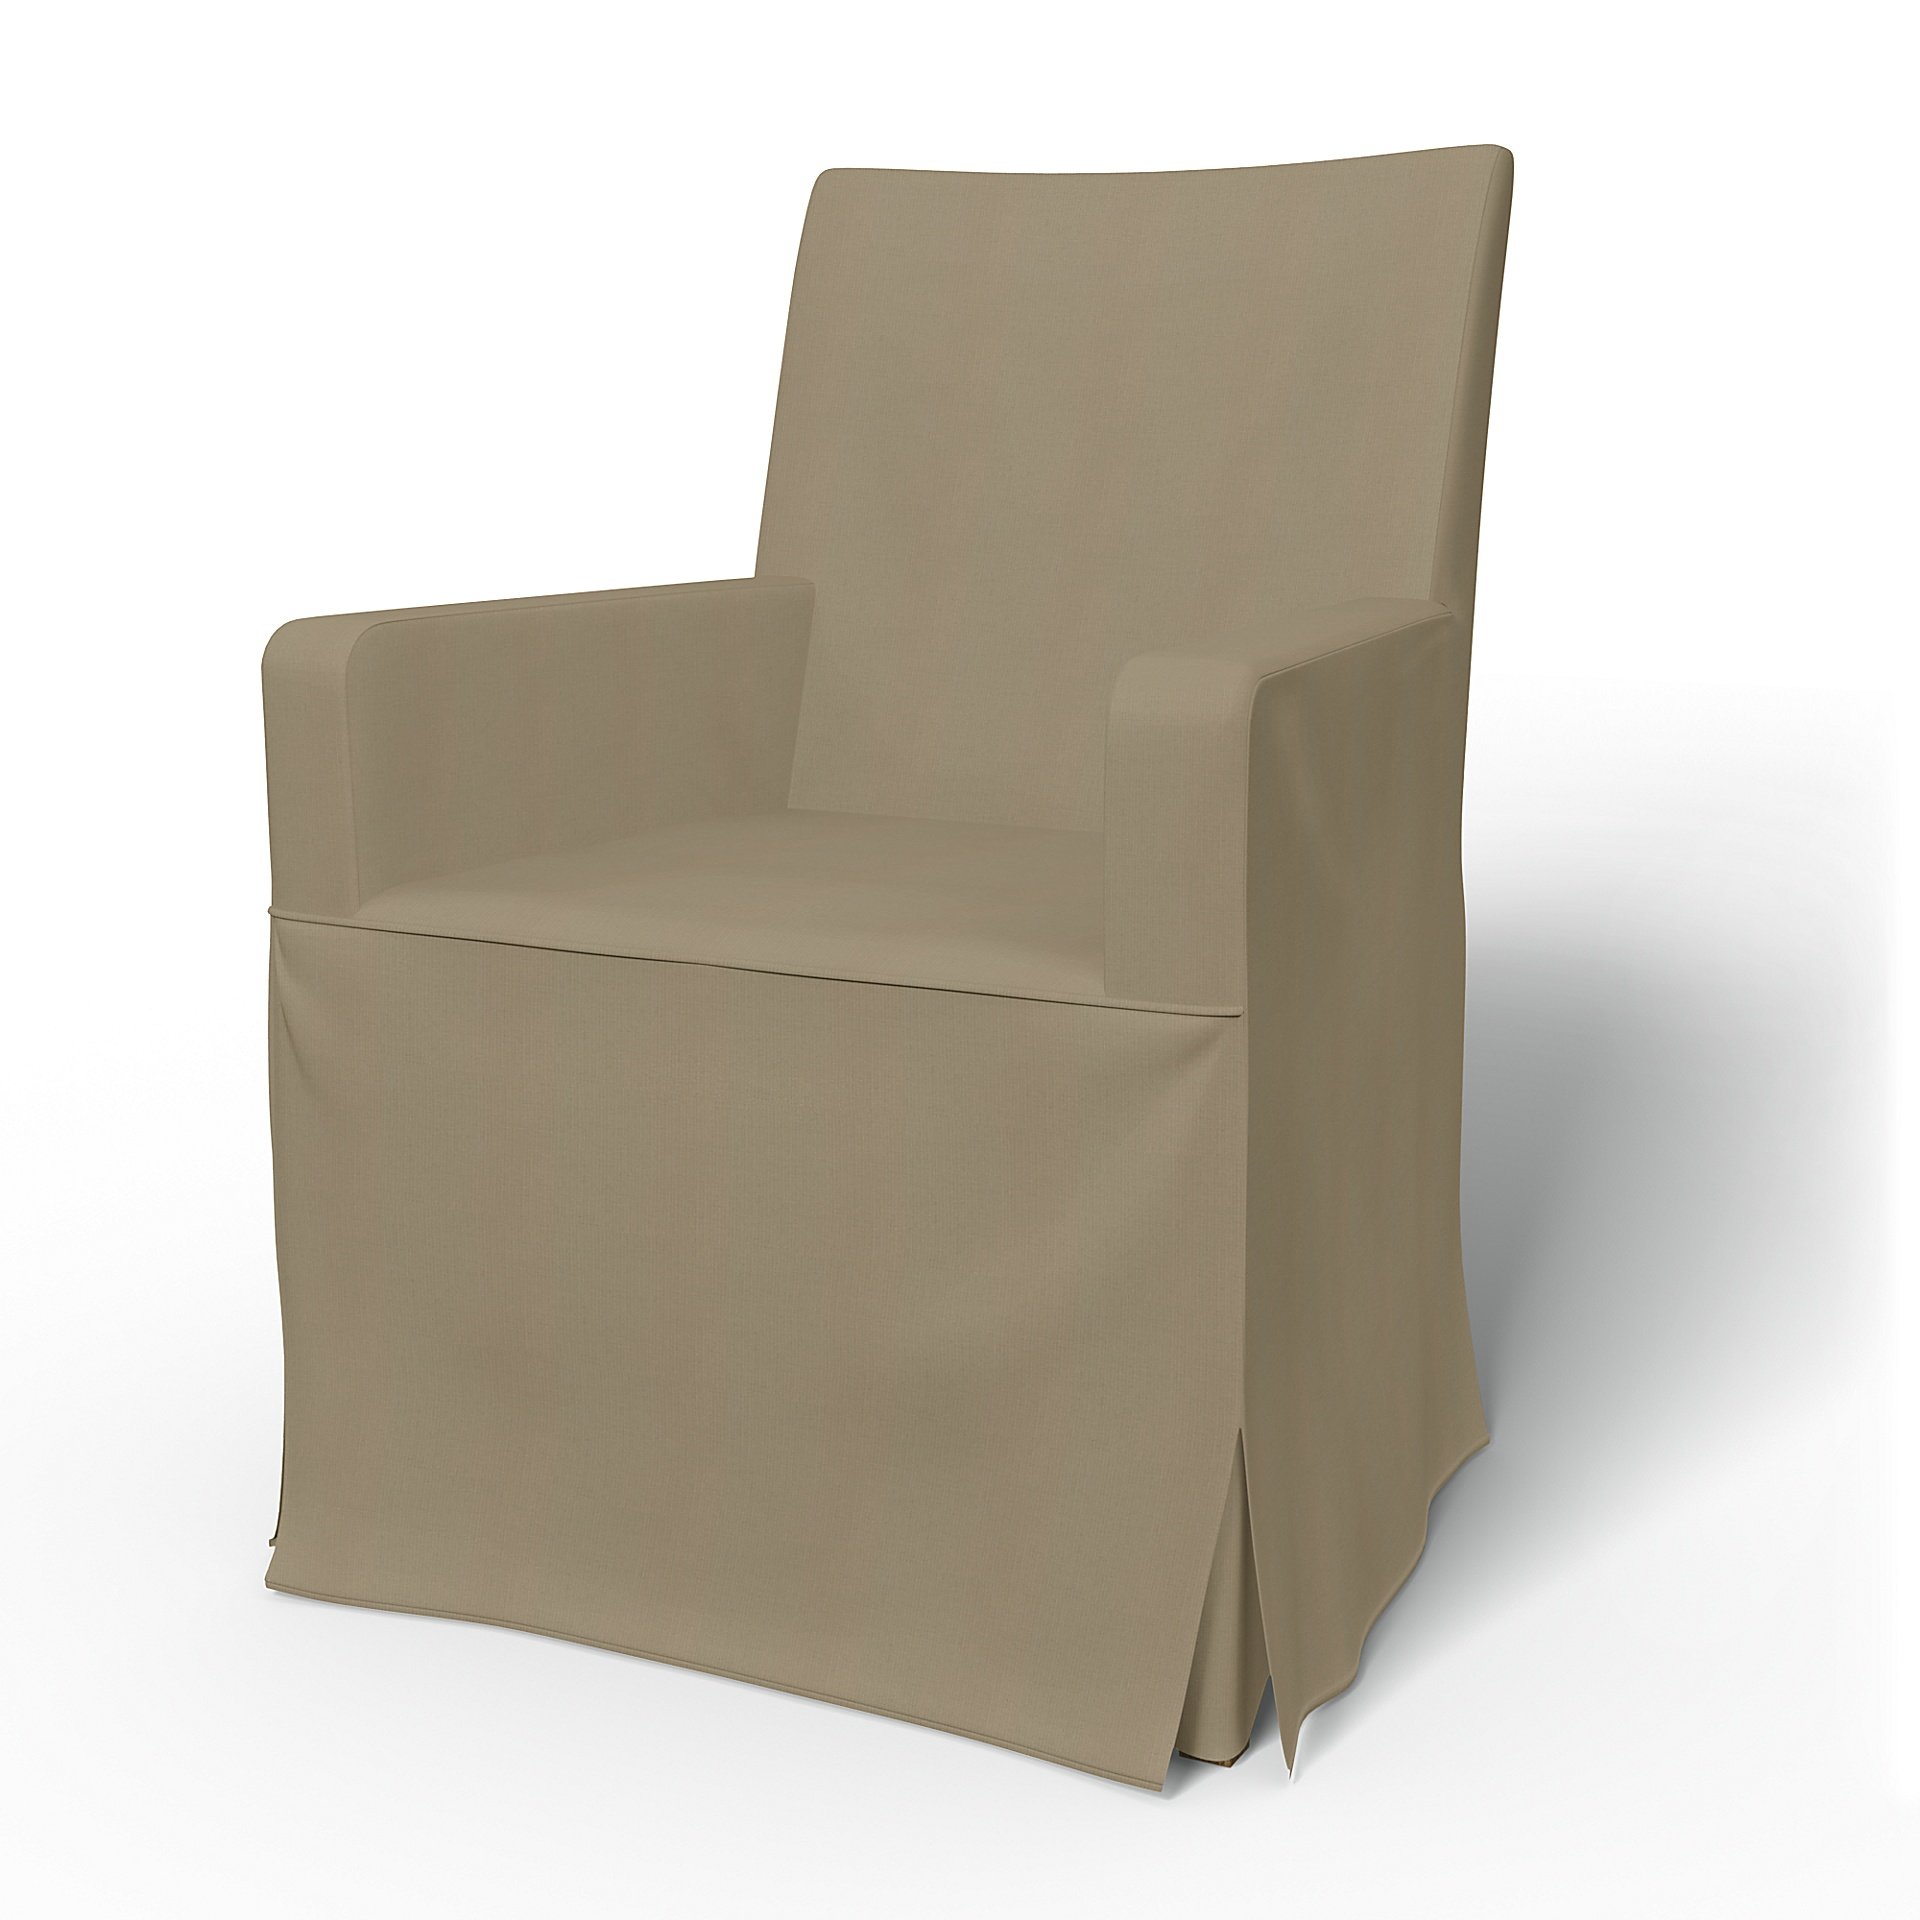 IKEA - Henriksdal, Chair cover w/ armrests, long skirt box pleat, Dark Sand, Outdoor - Bemz